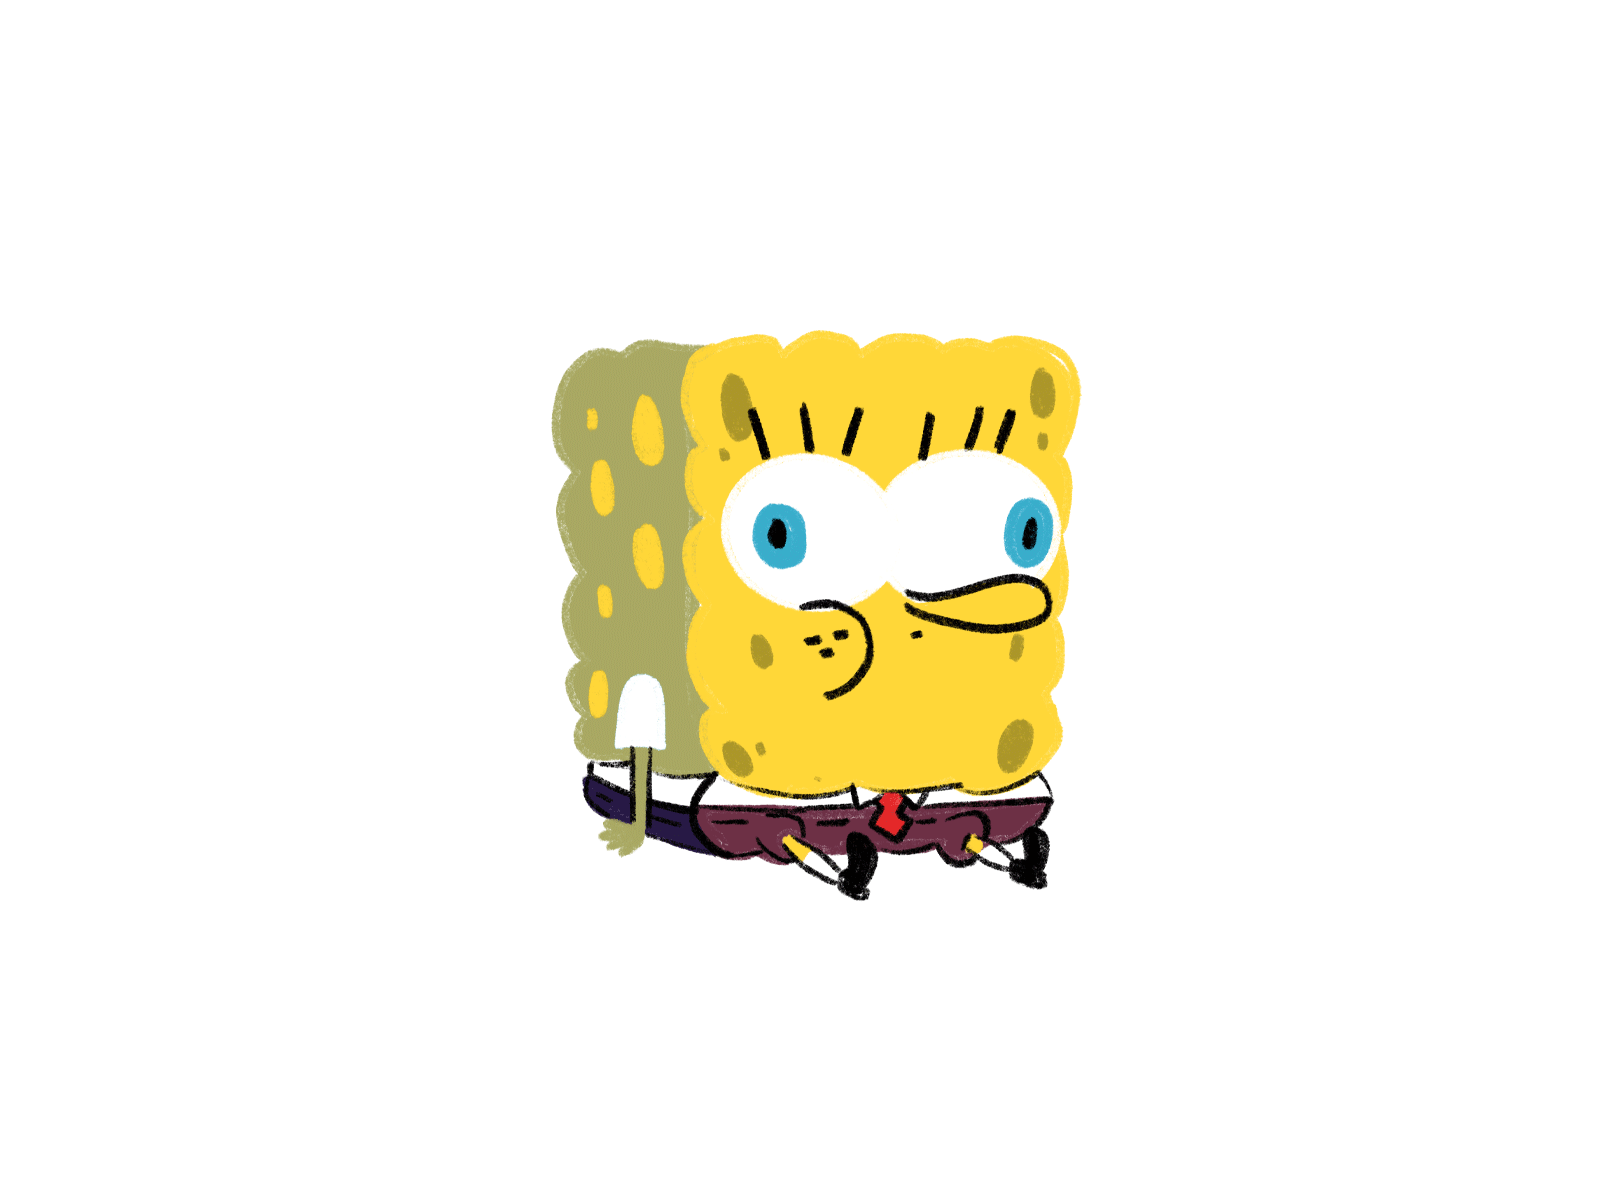 Bob the Sponge animation bikini bottom character frame by frame frame to frame gif loop sponge spongebob spongebob squarepants